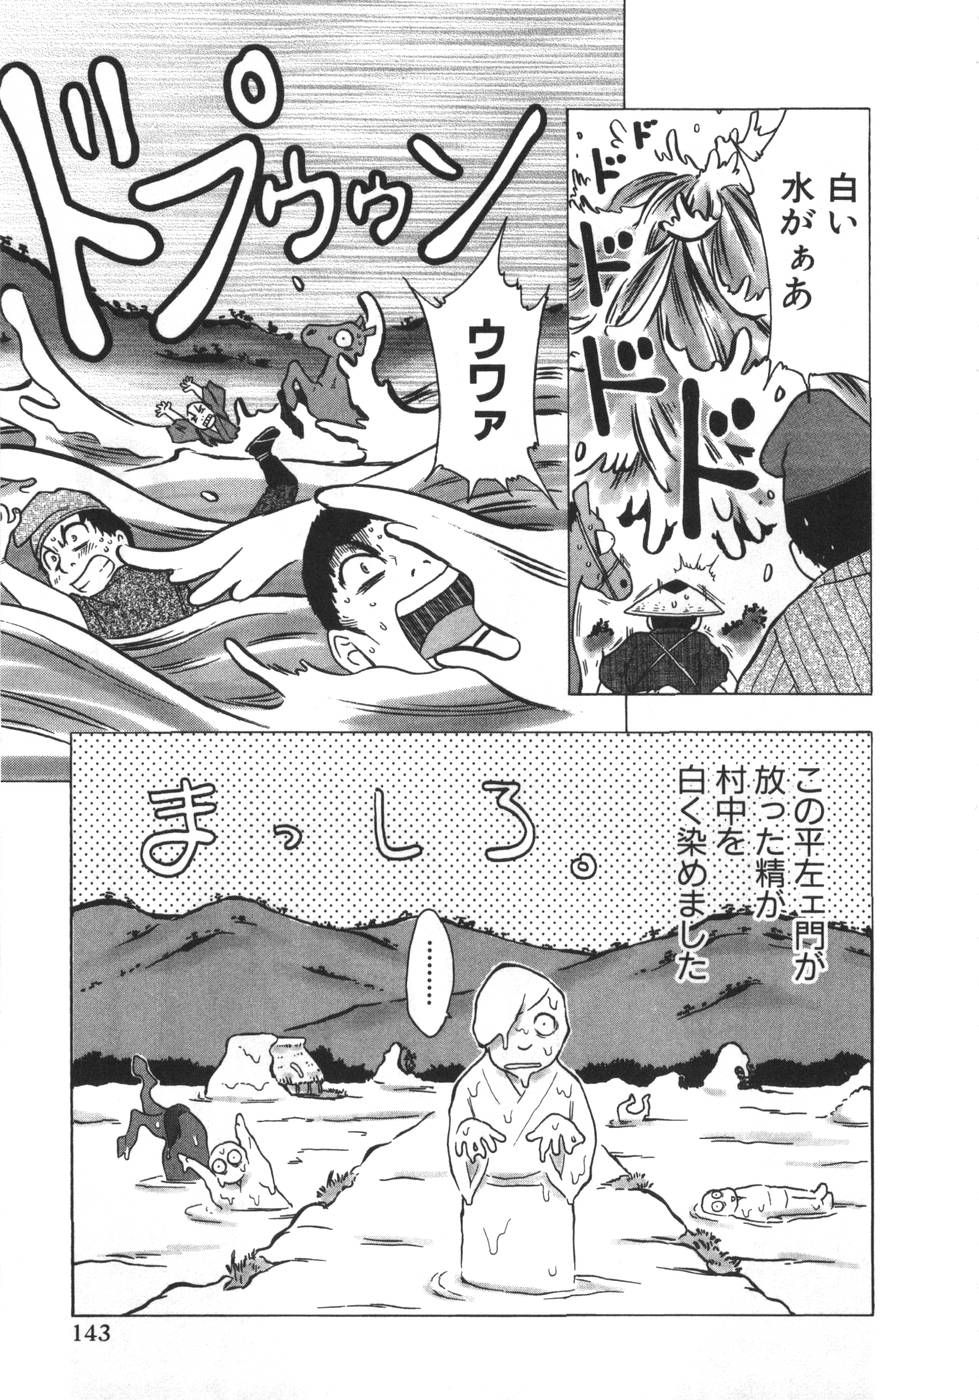 [the second spirit death] does a sprite die with a sperm of Toshiaki Kochi; cruel House キアラ of FGO? 6